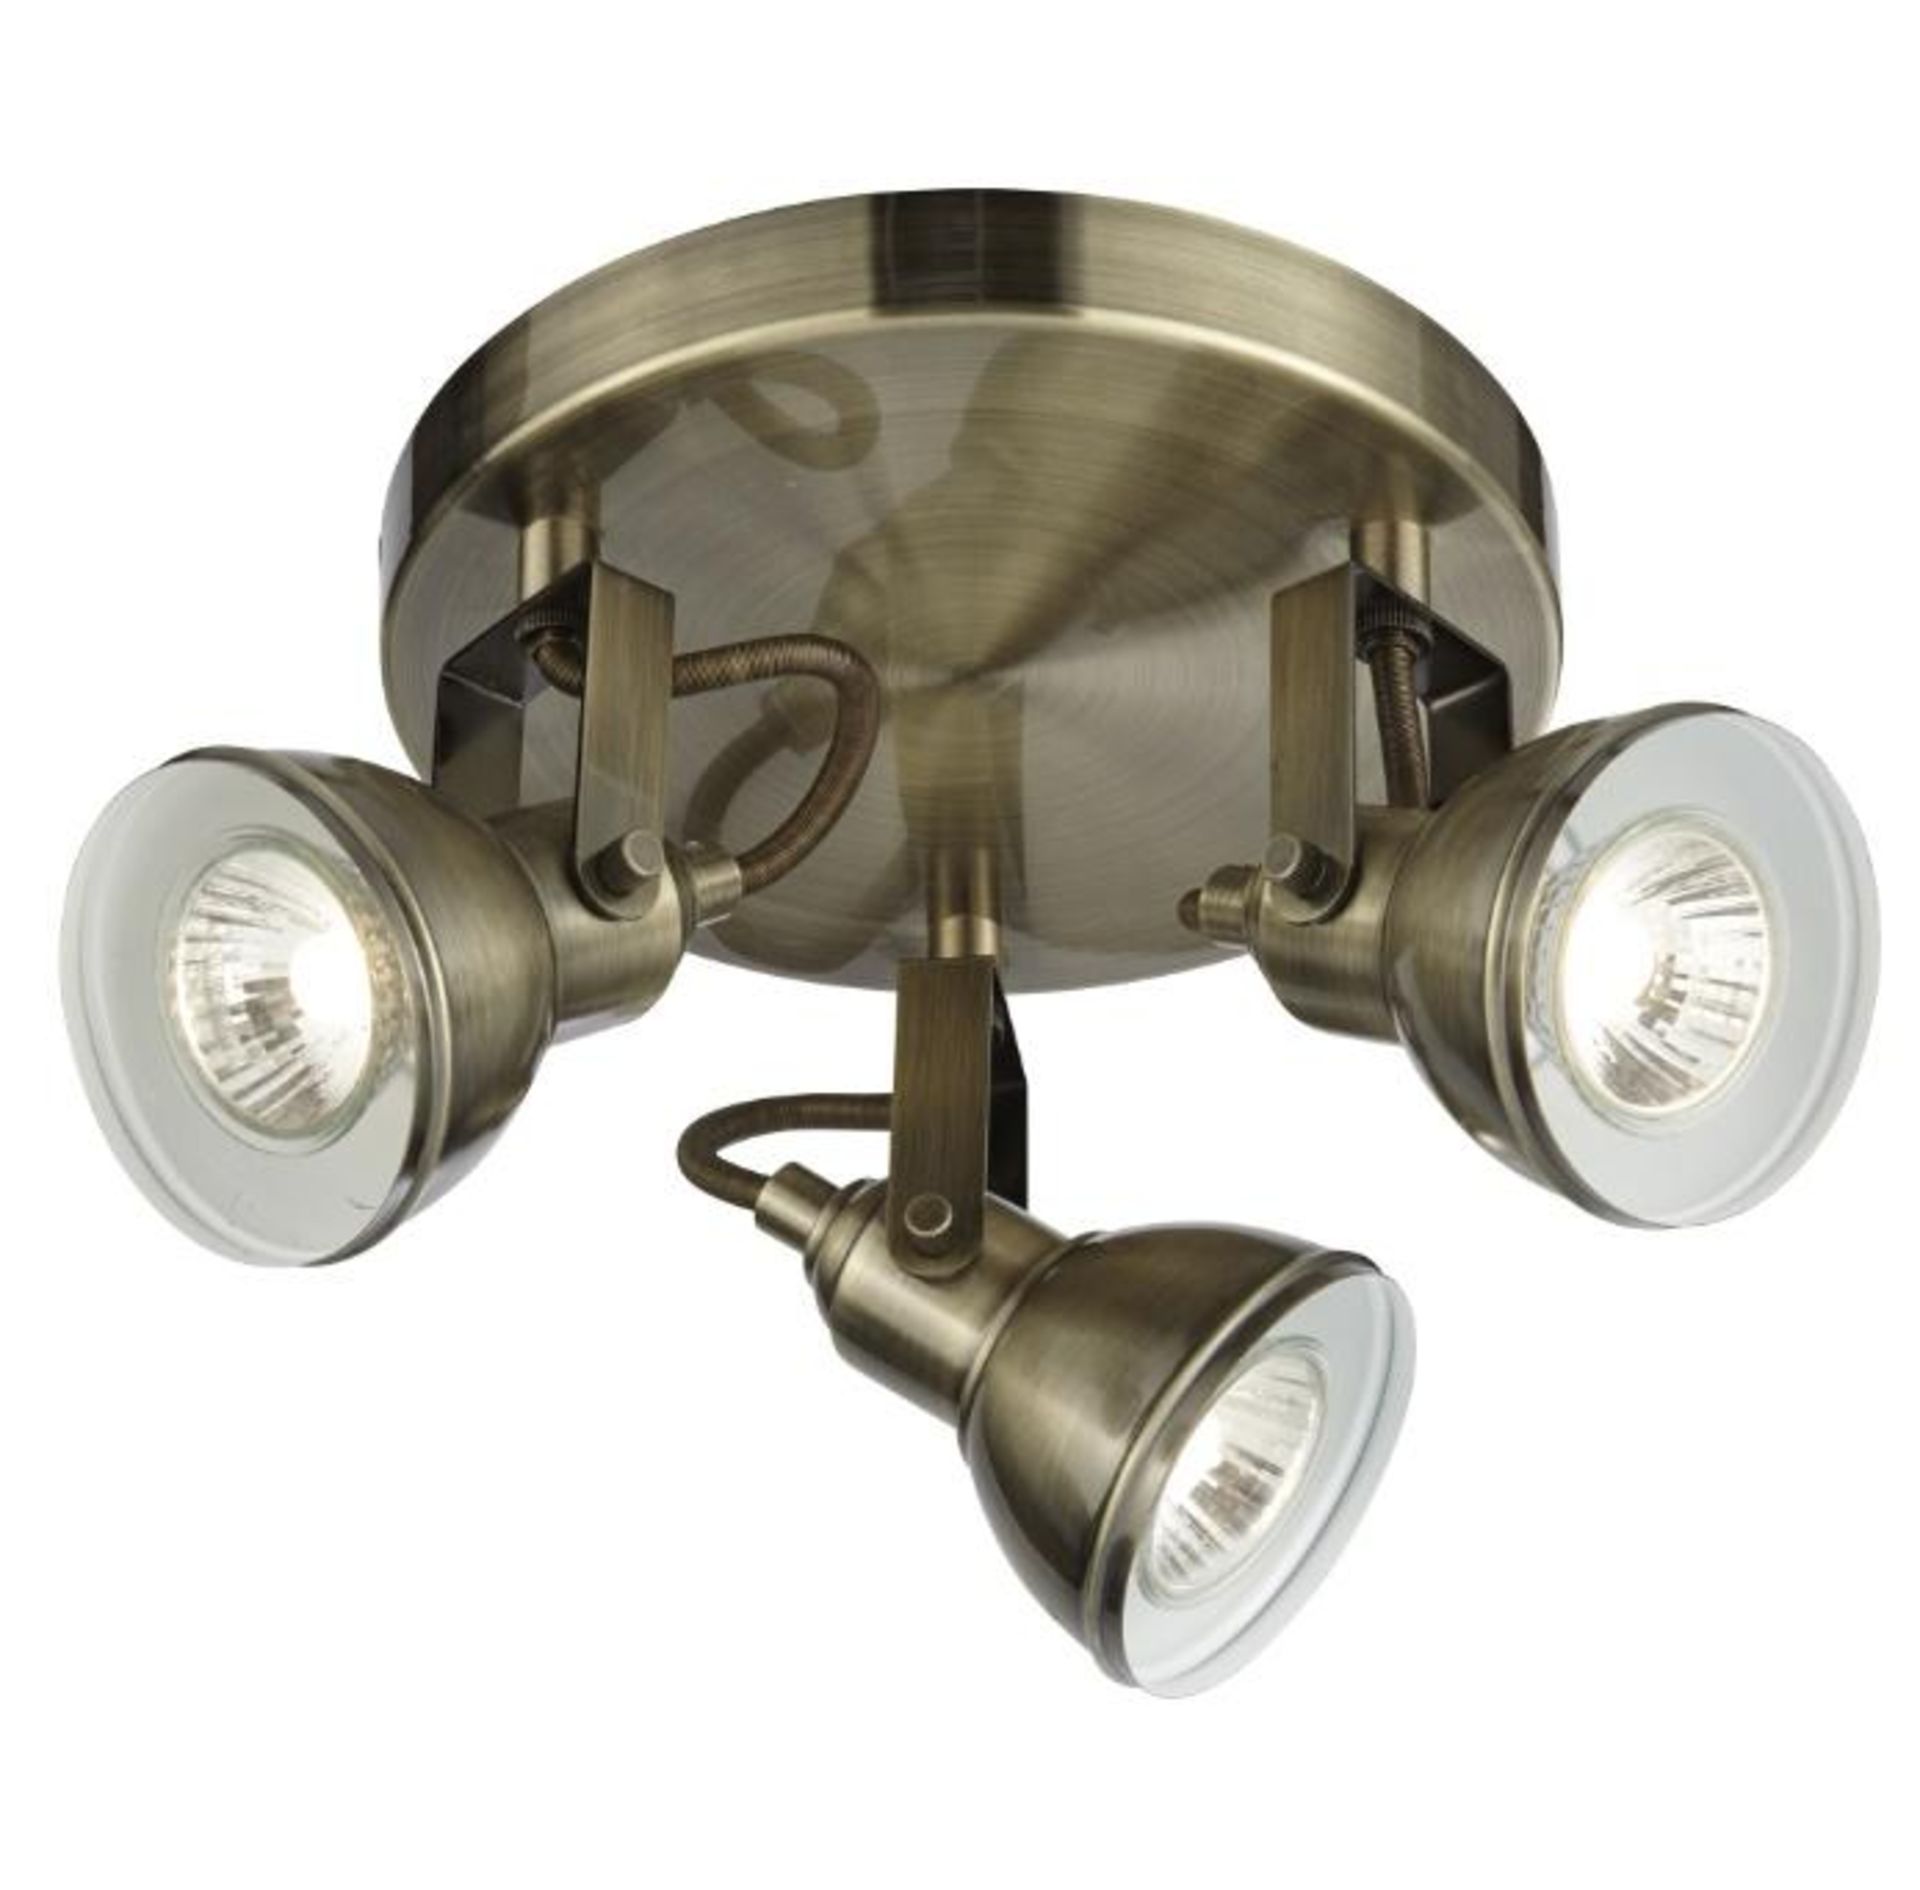 1 x Focus 3 Light Antique Brass Ceiling Spotlight With Round Plate - Brand New